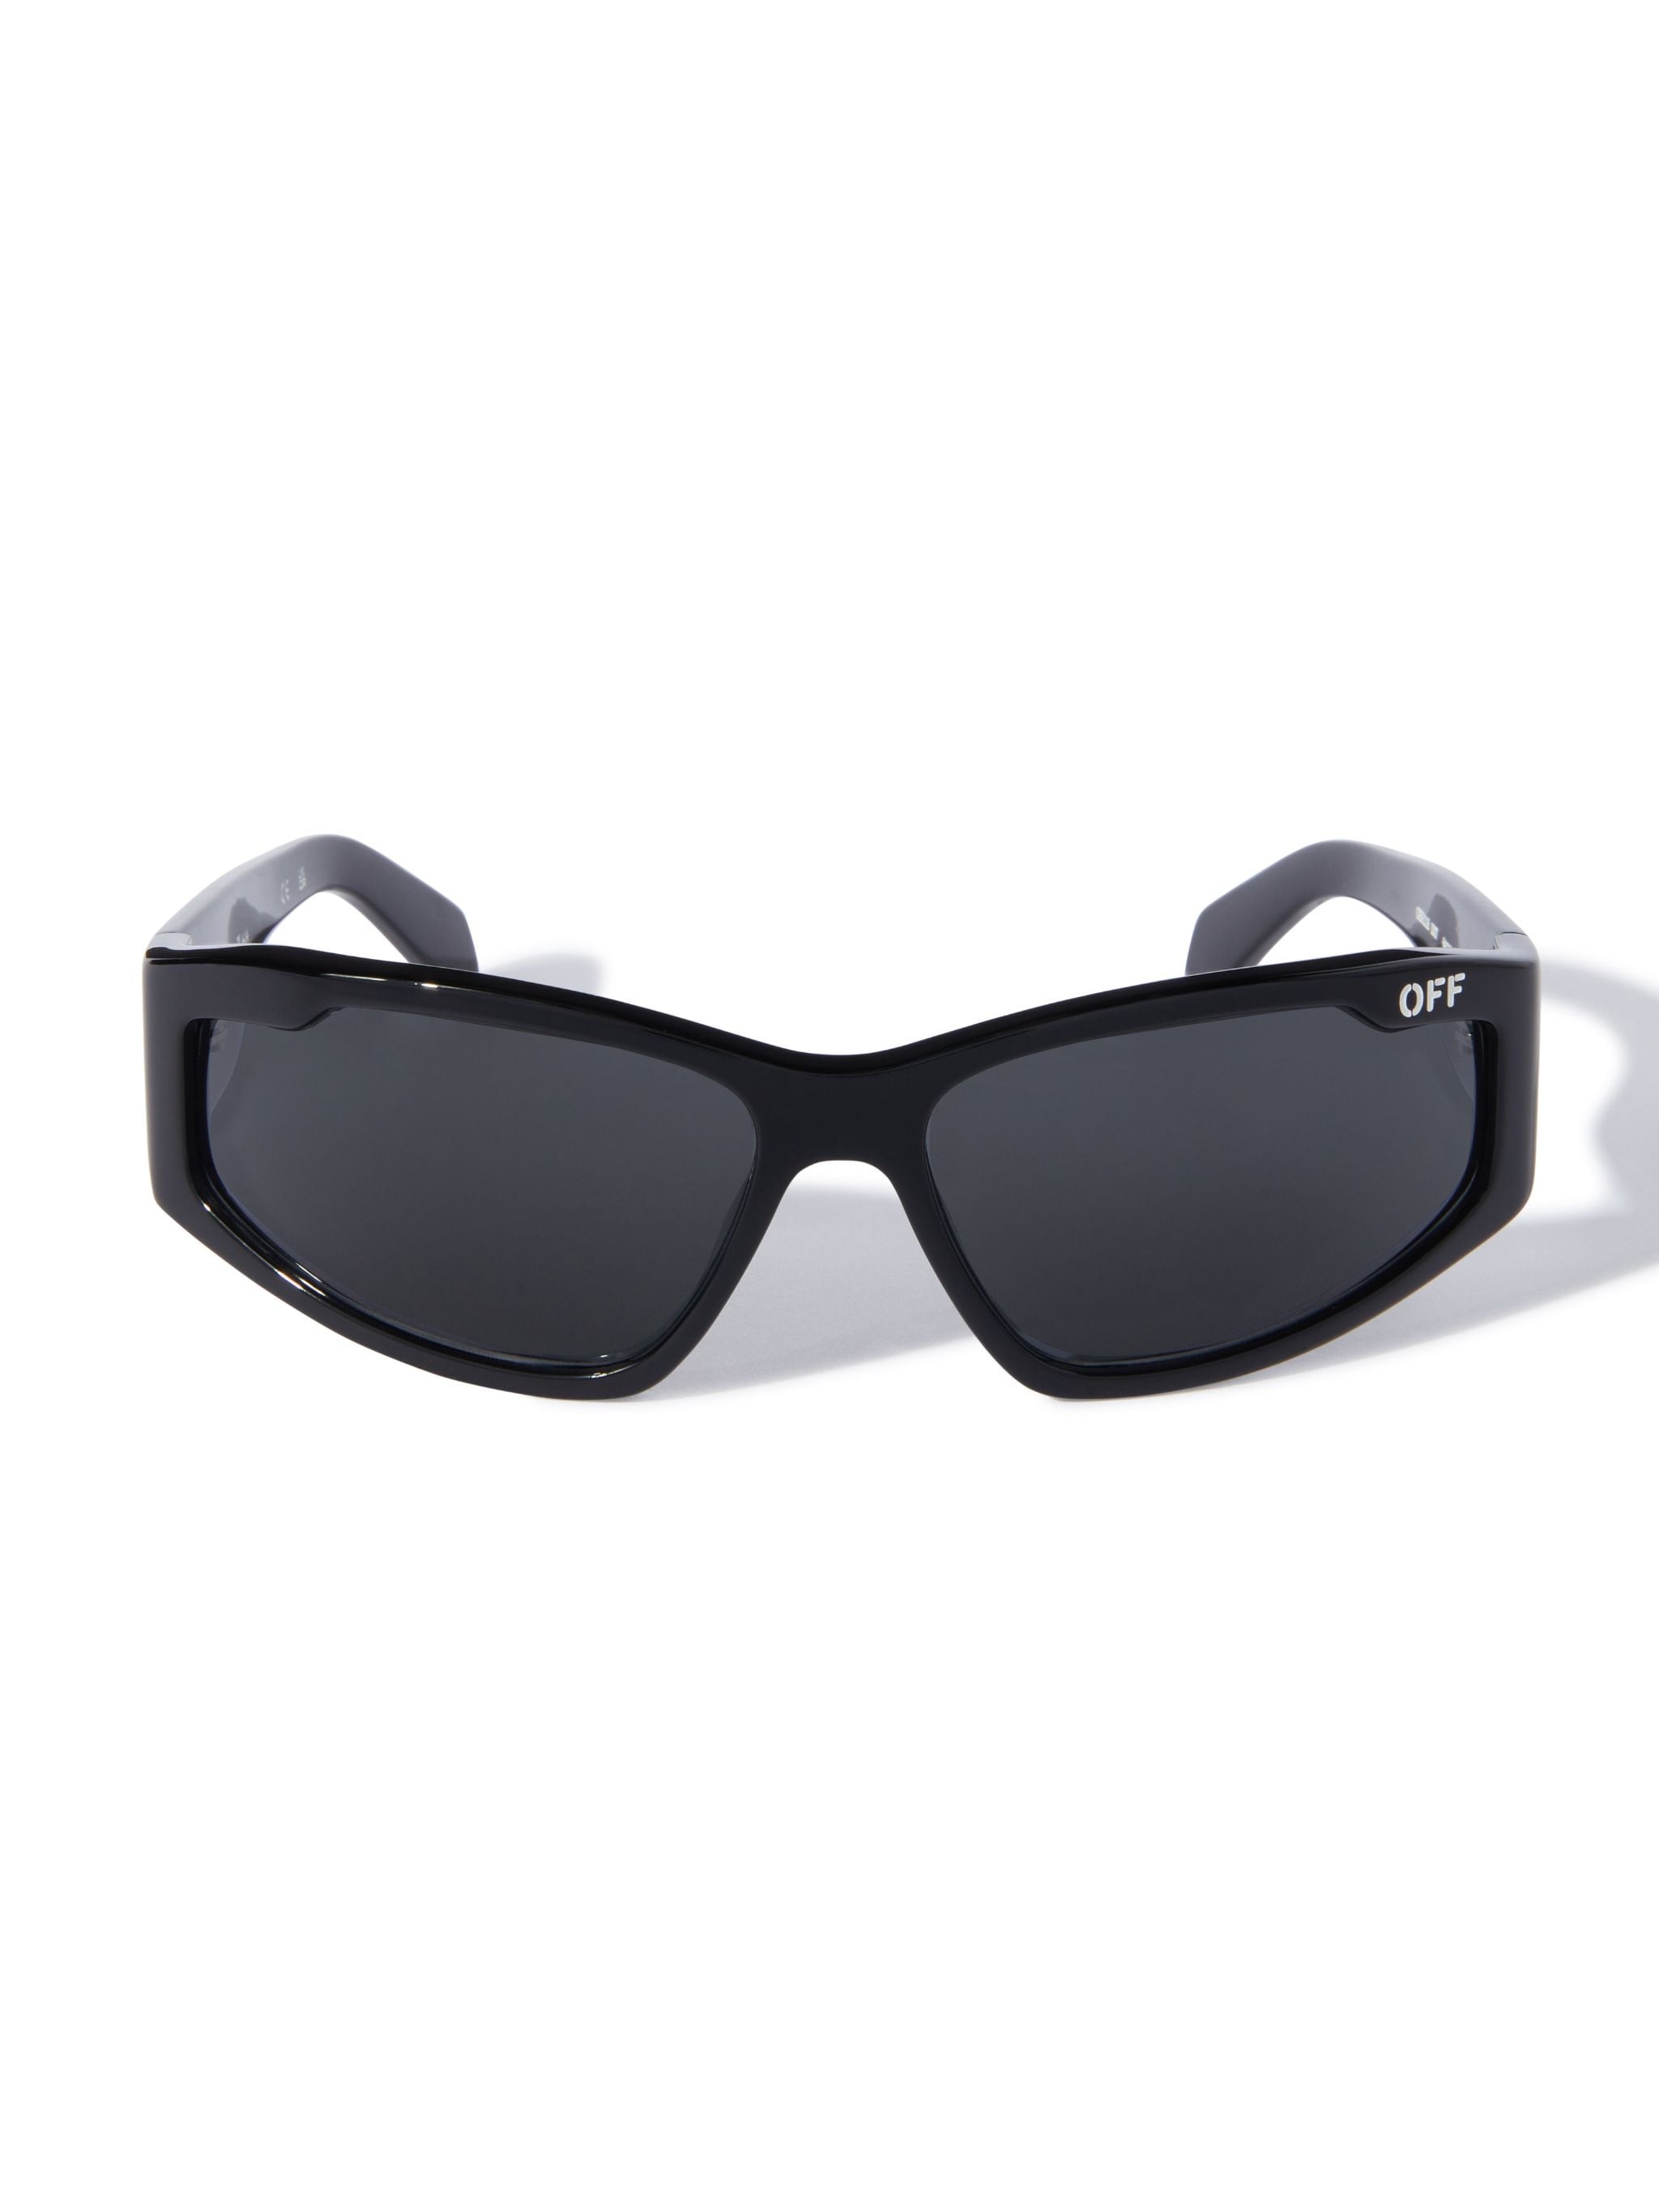 Kimball Sunglasses - 1